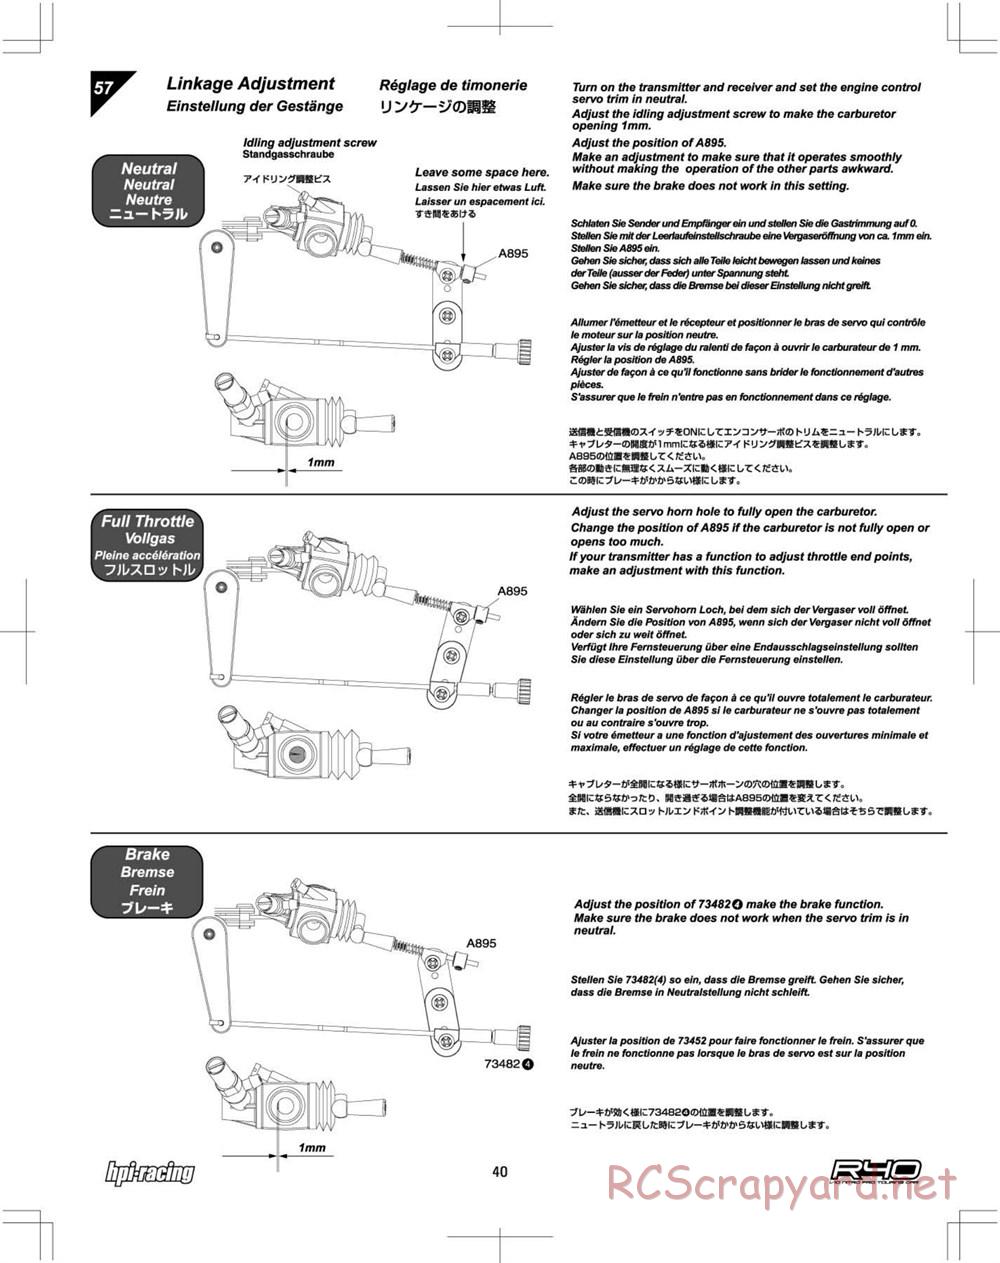 HPI - R40 Nitro Touring Car - Manual - Page 40